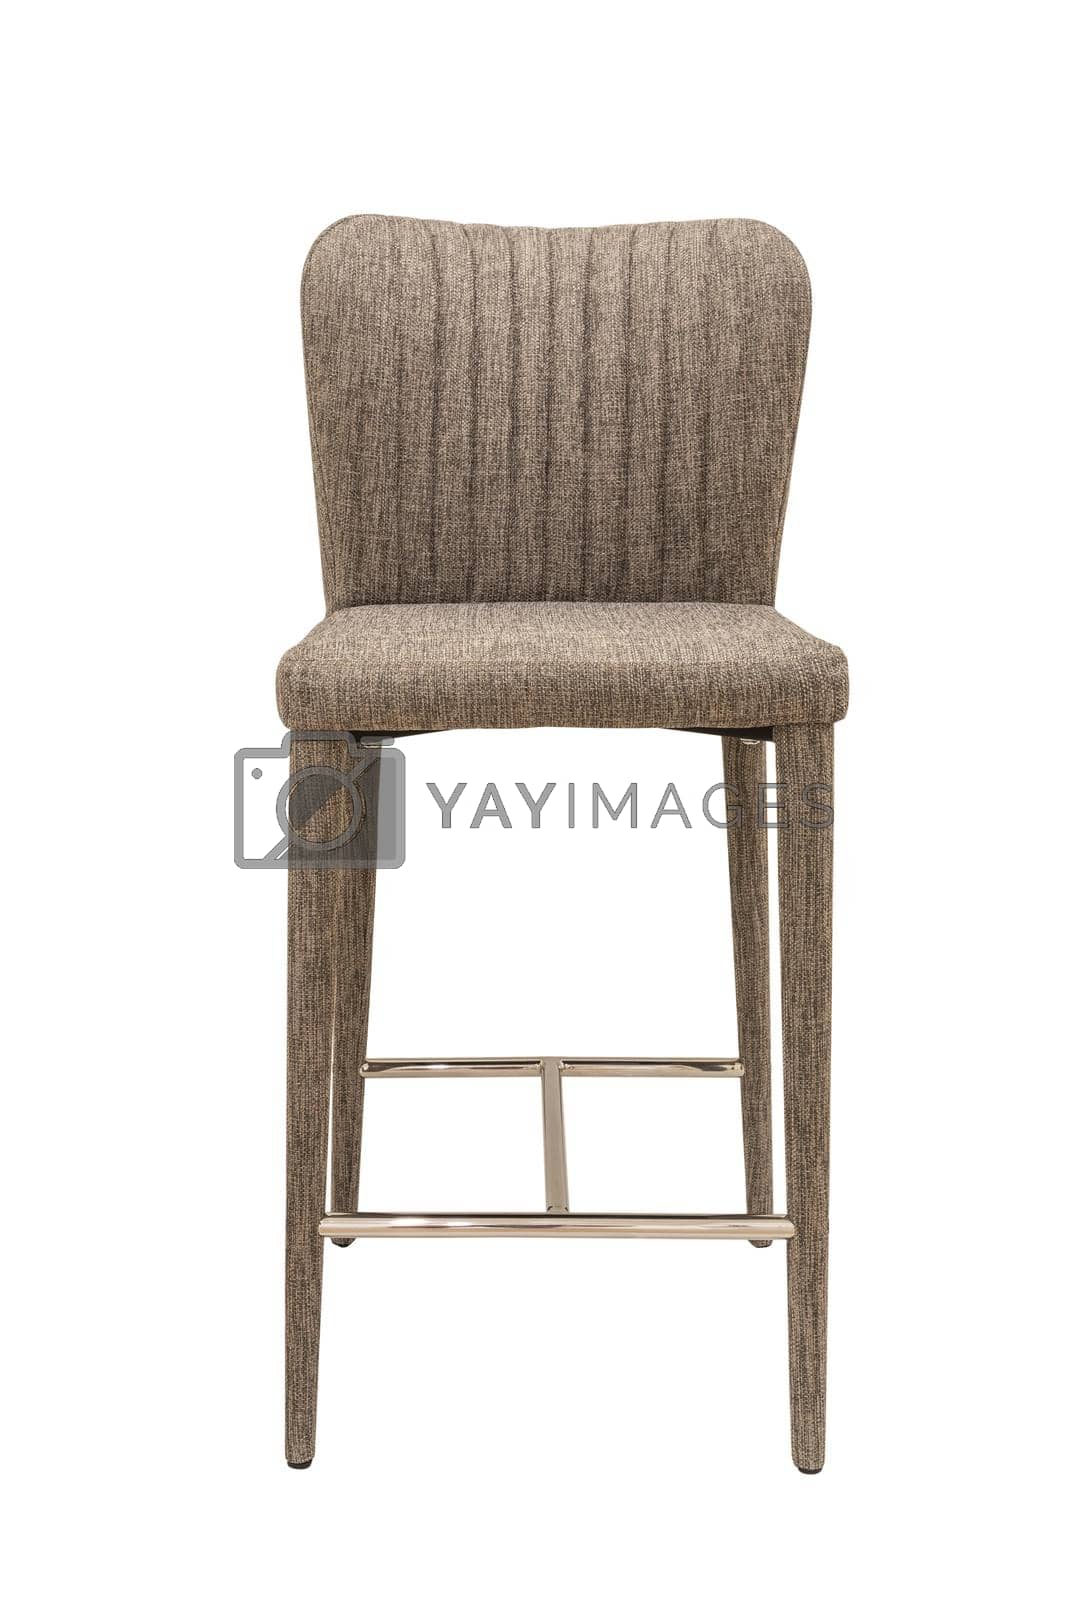 Royalty free image of Tall gray bar stool by Mariakray